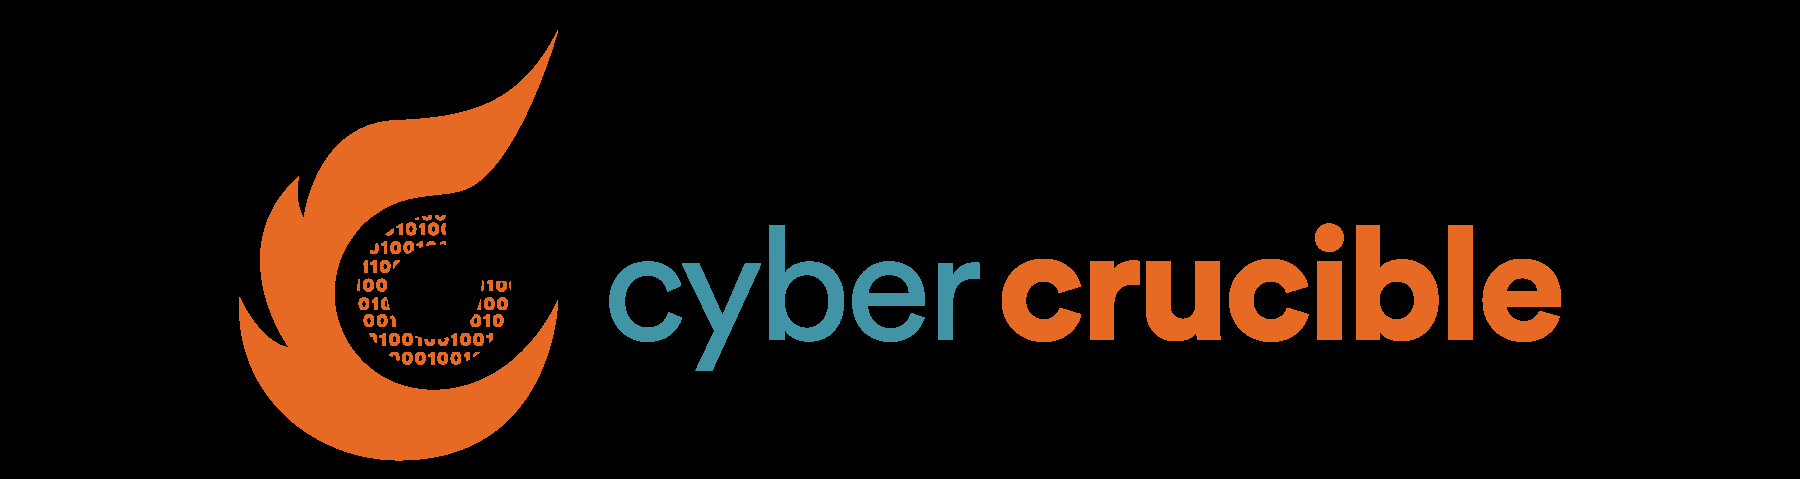 cybercrucible_logo